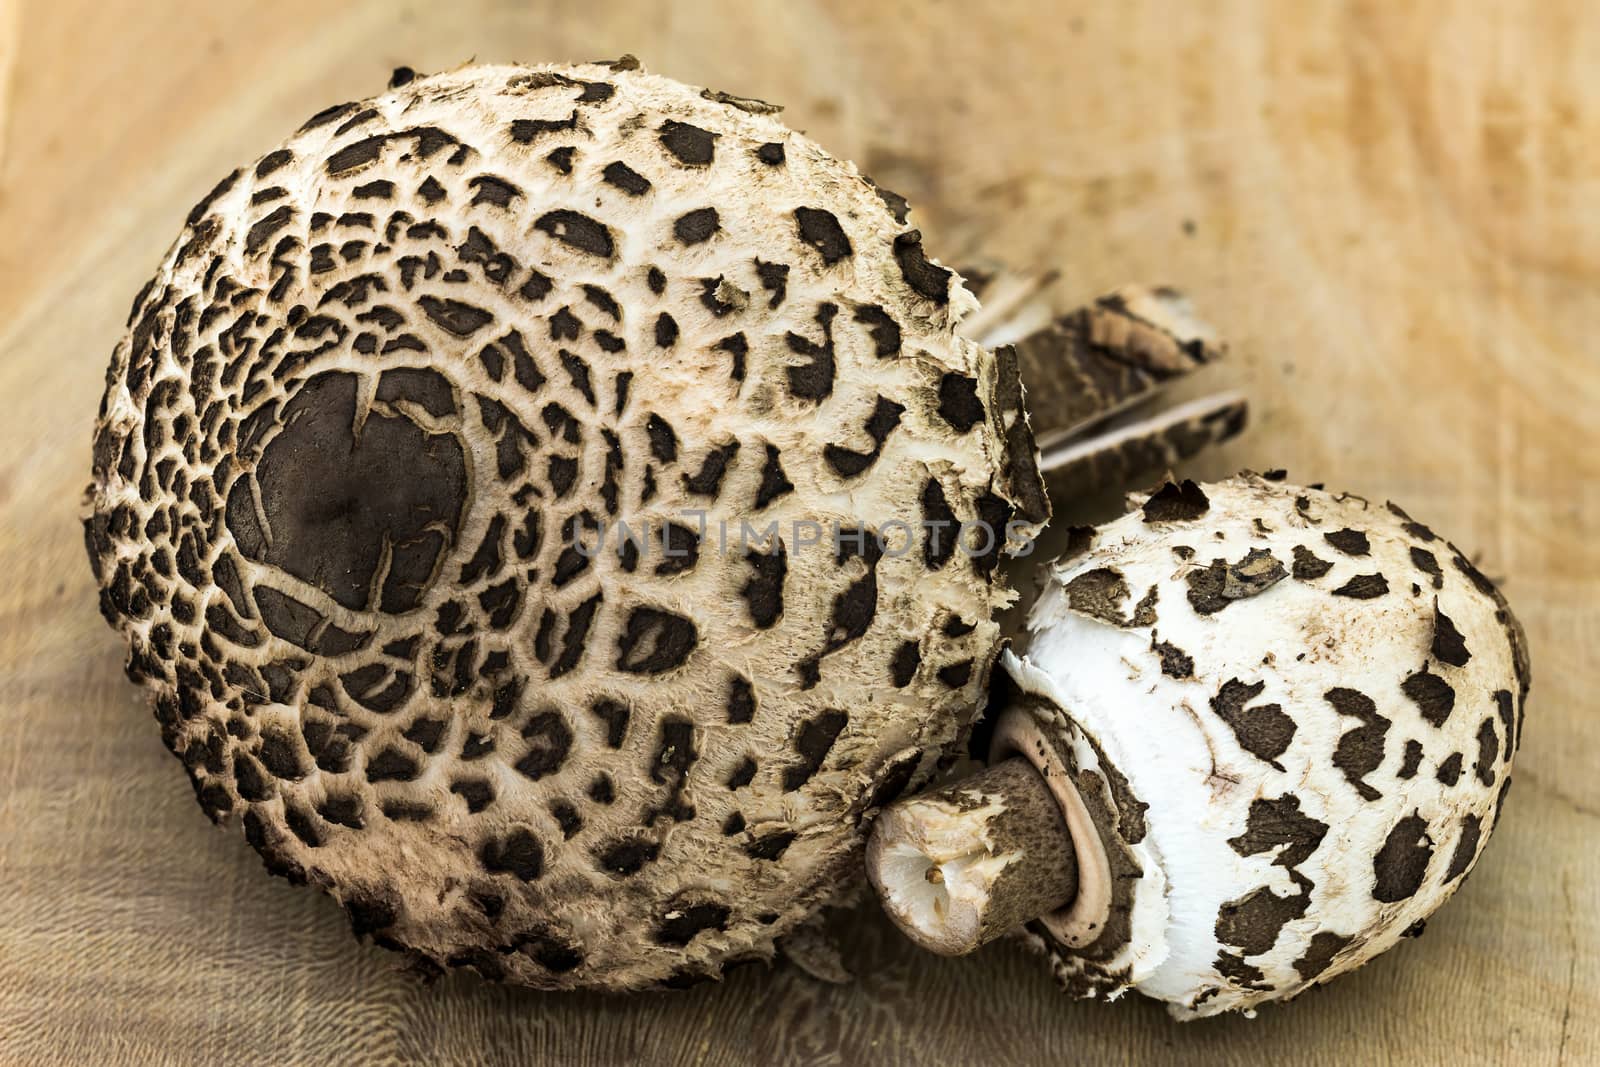 Closeup of parasol mushroom (Macrolepiota procera)